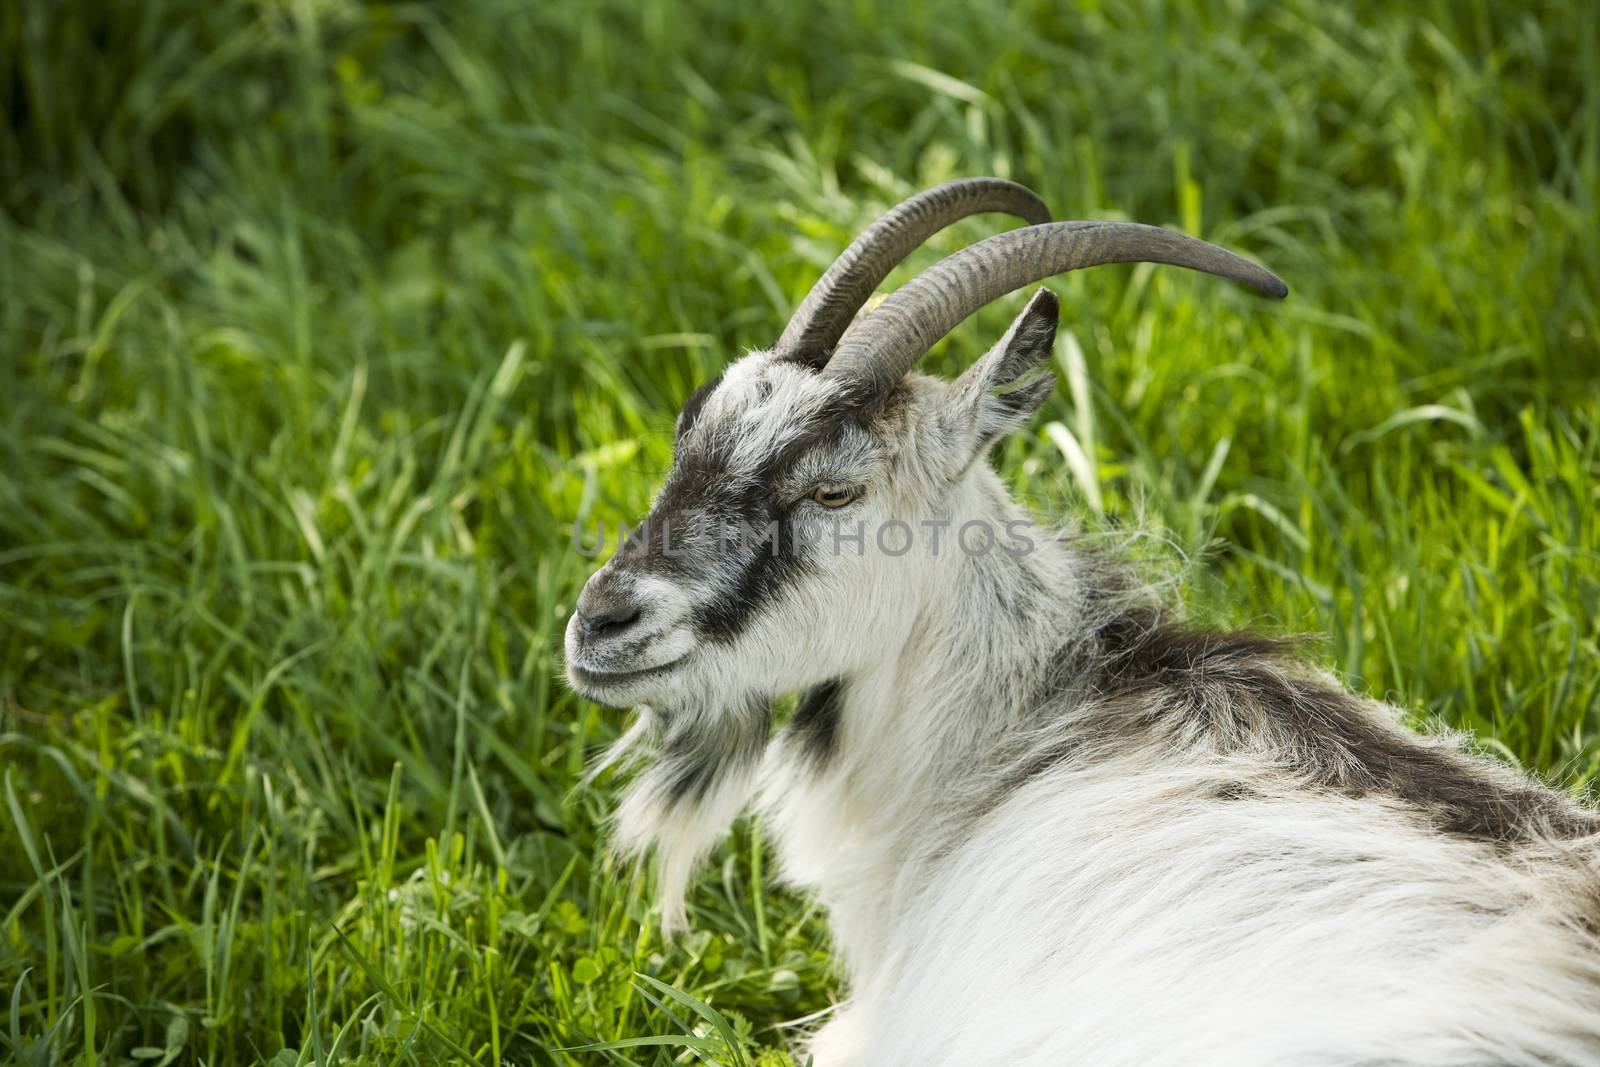 Goat by gemenacom